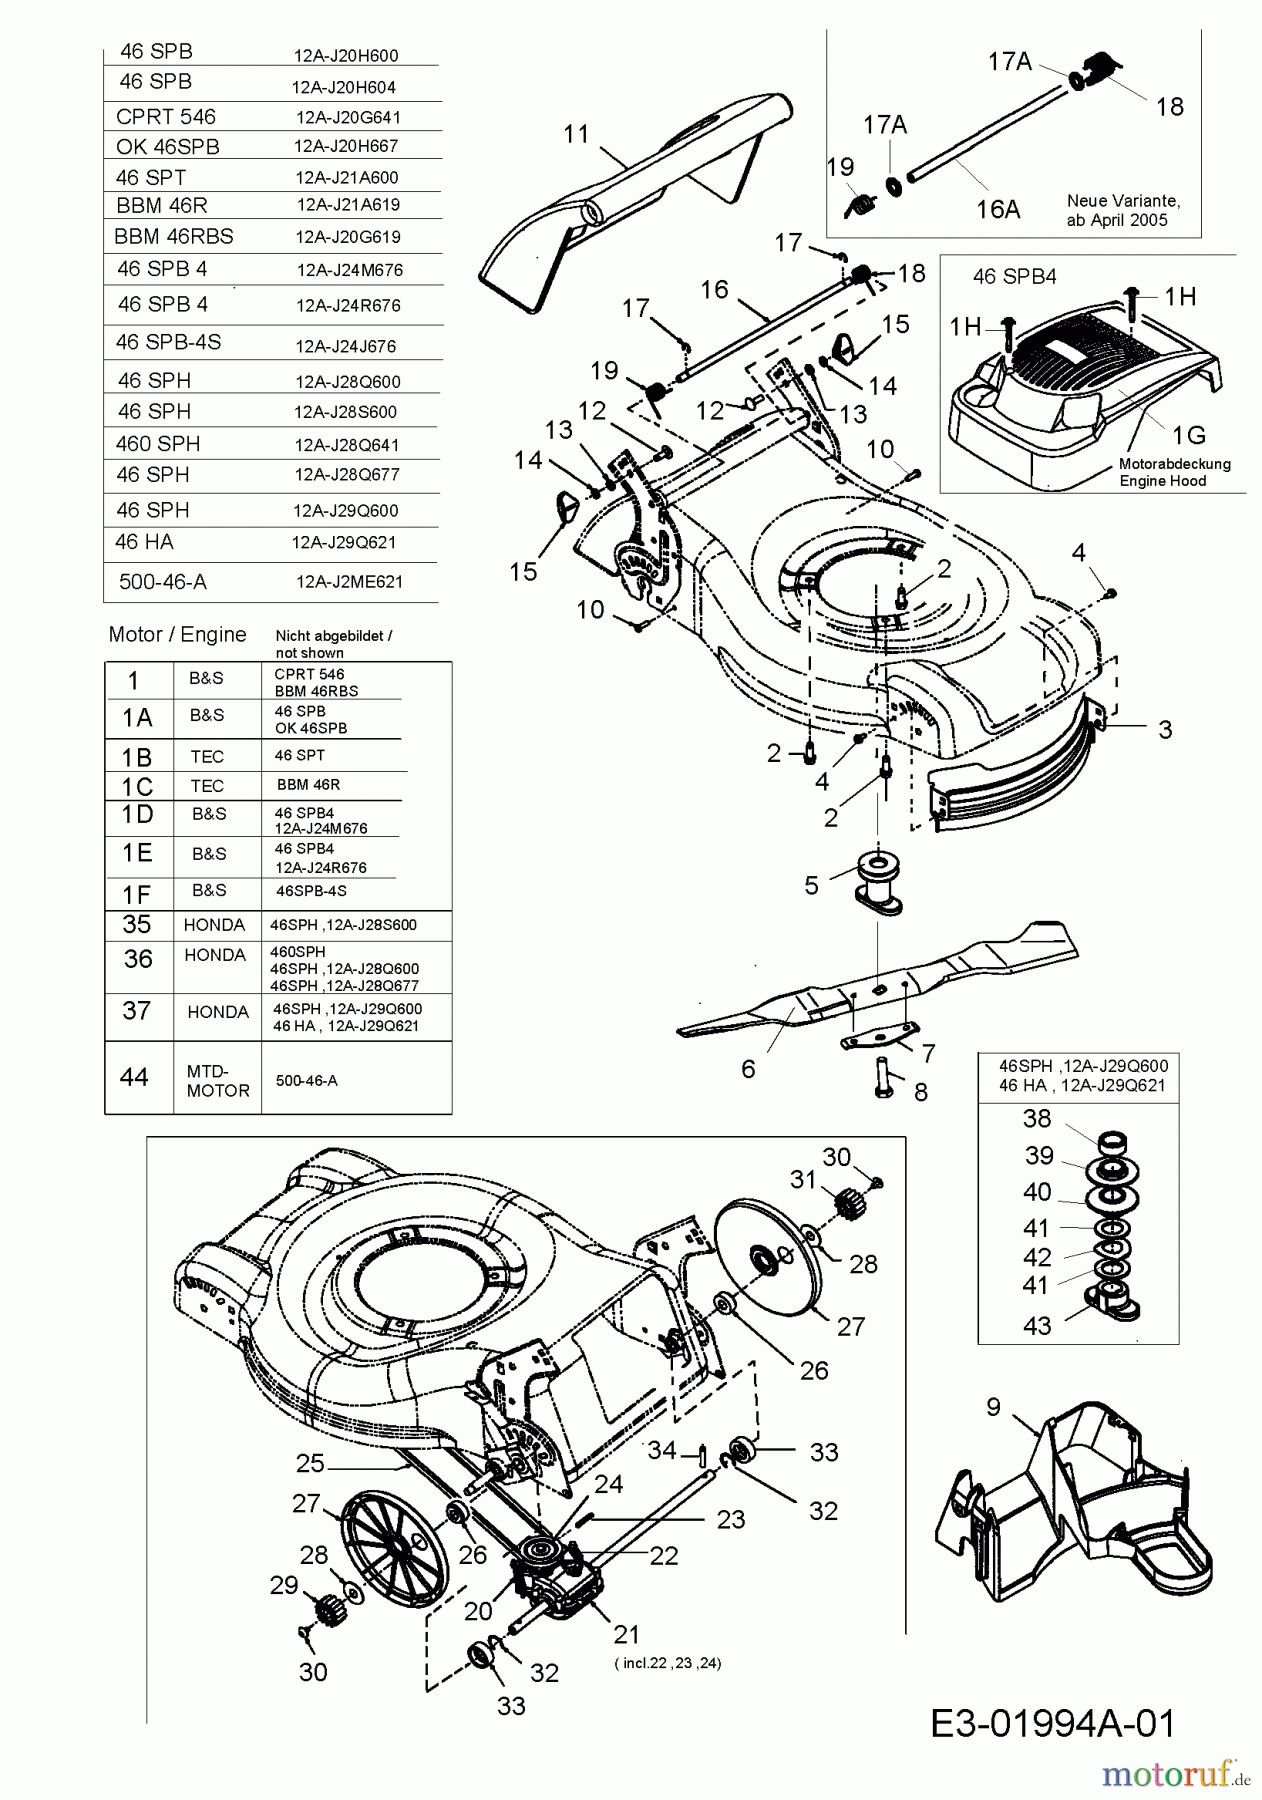  MTD Motormäher mit Antrieb 460 SPH 12A-J28Q641  (2005) Getriebe, Messer, Motor